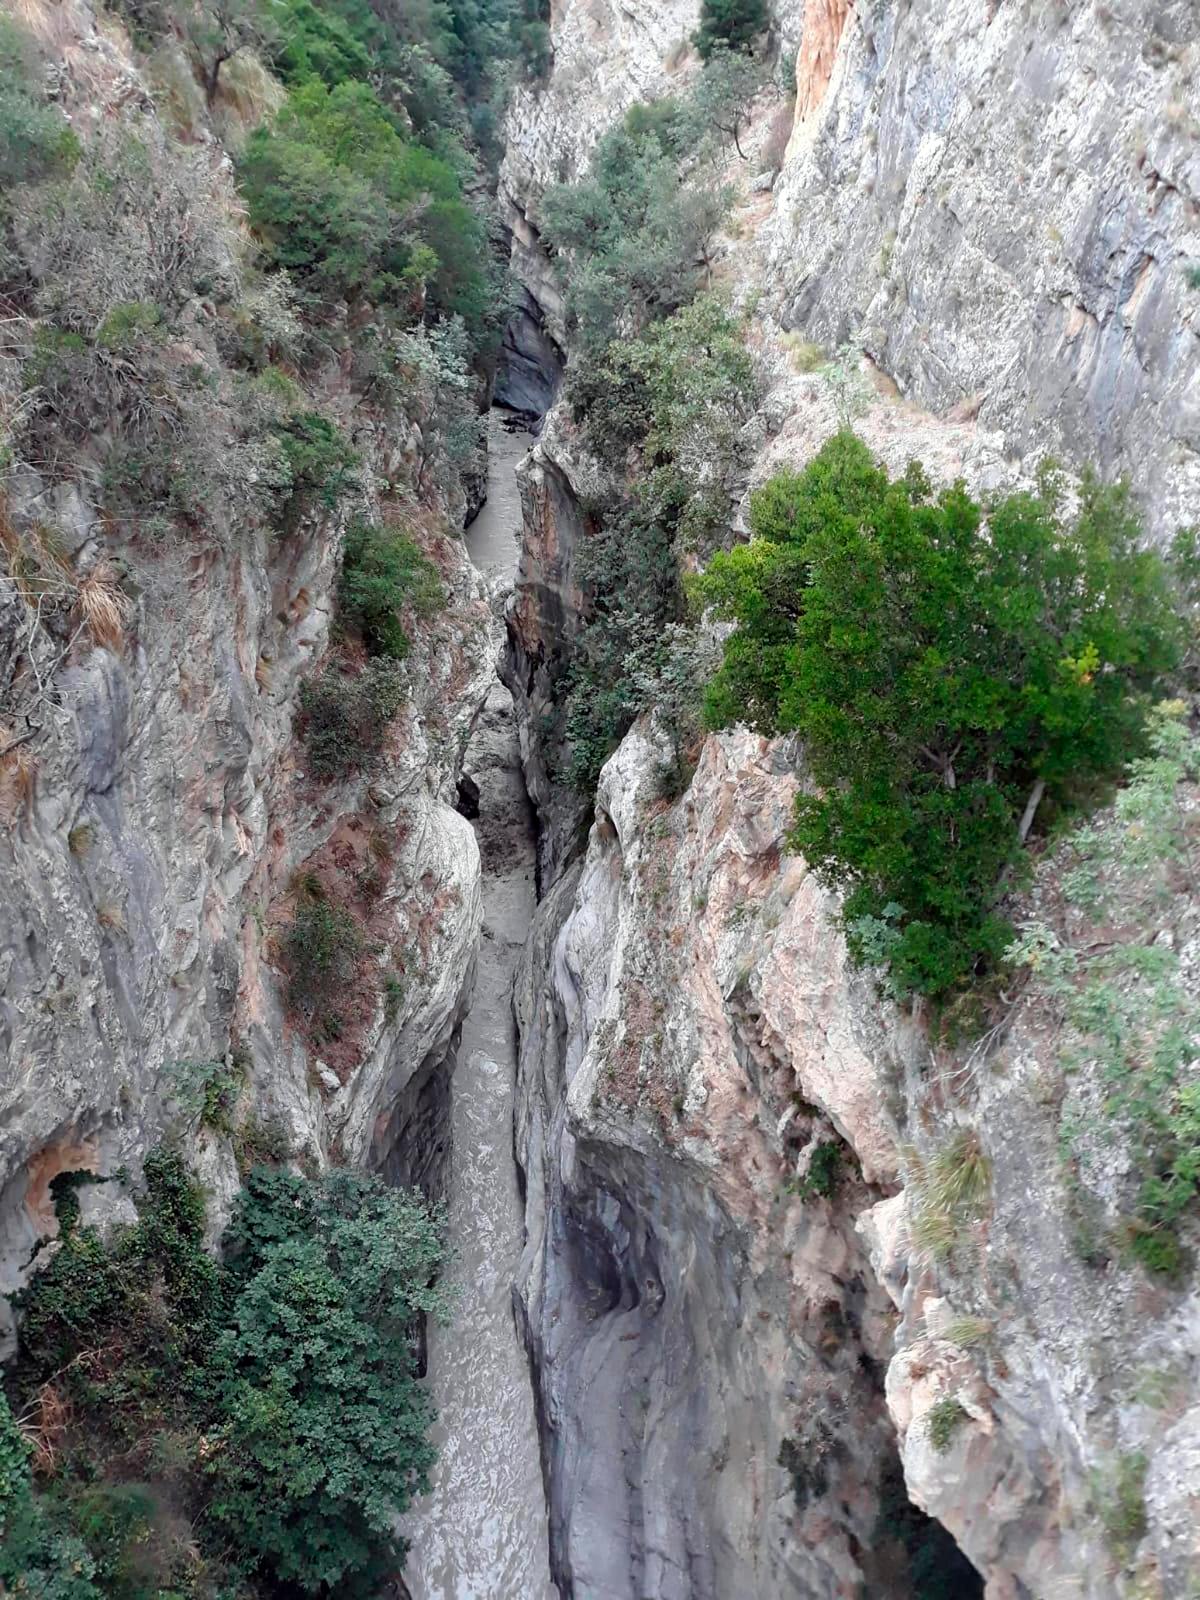 A view of the Raganello Gorge in Civita, Italy on Aug. 20, 2018. (Antonio Iannicelli/AP)